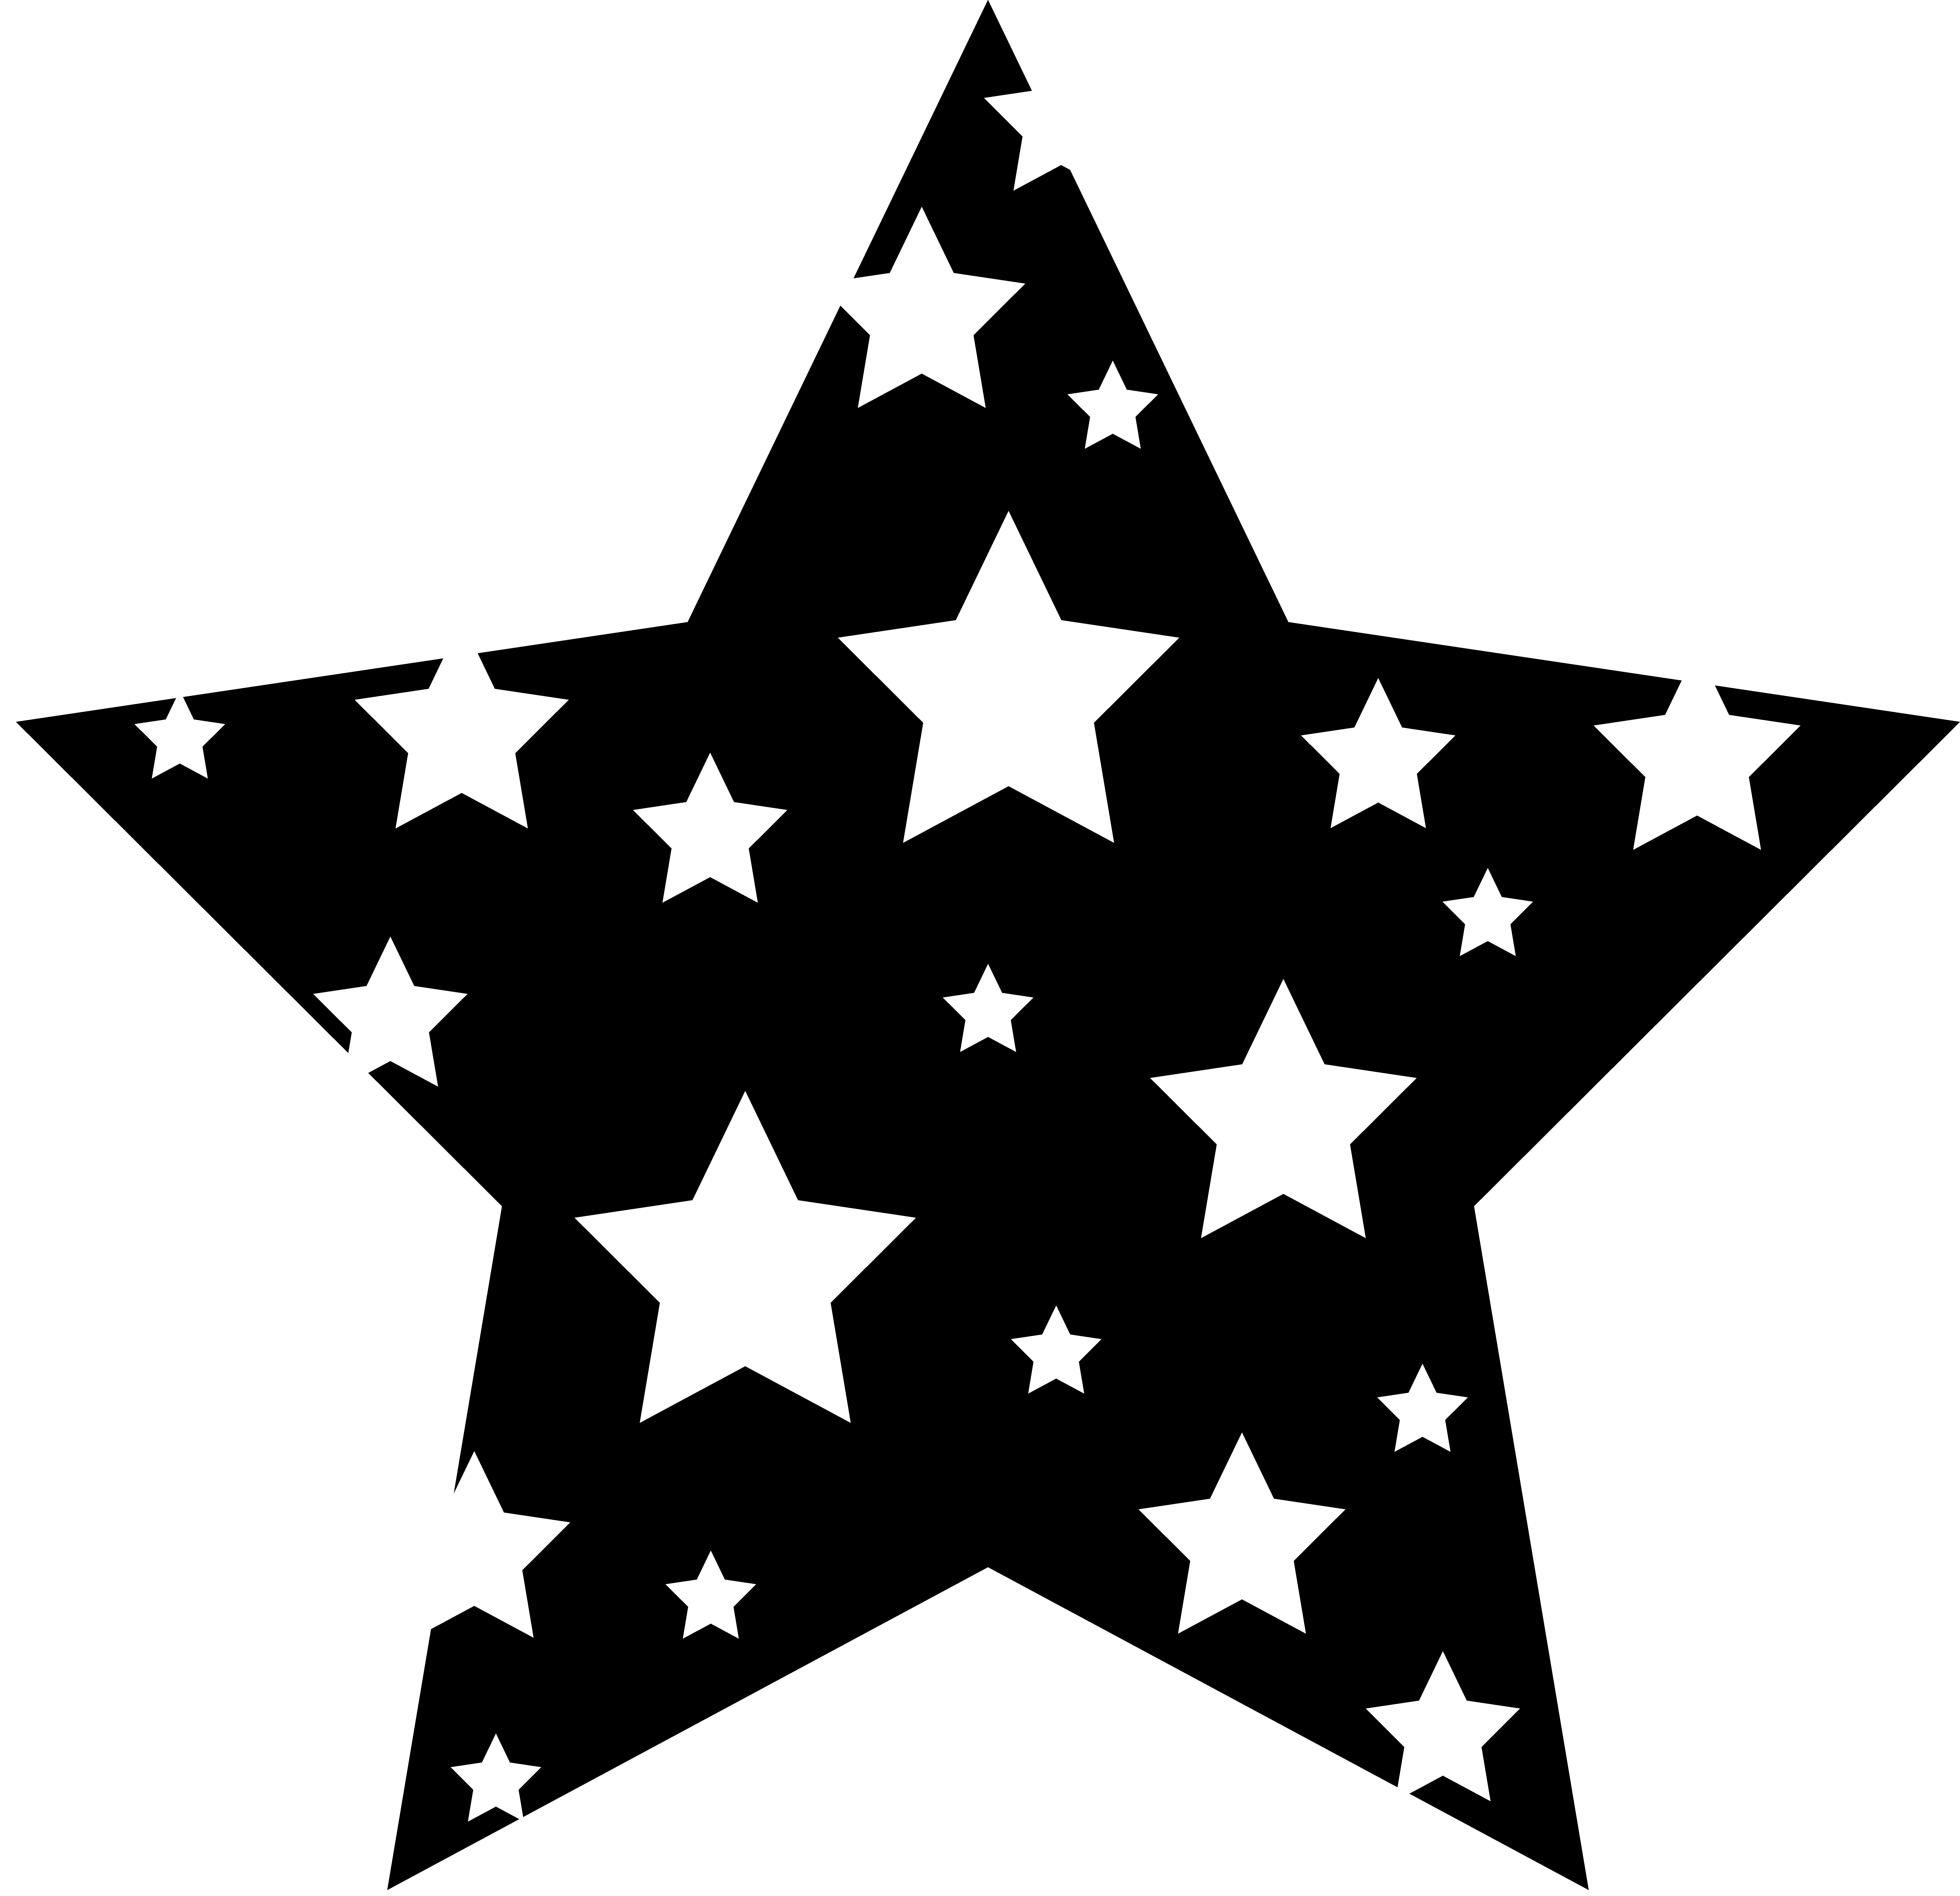 Star,stars,symbol,symbols,black - free image from needpix.com